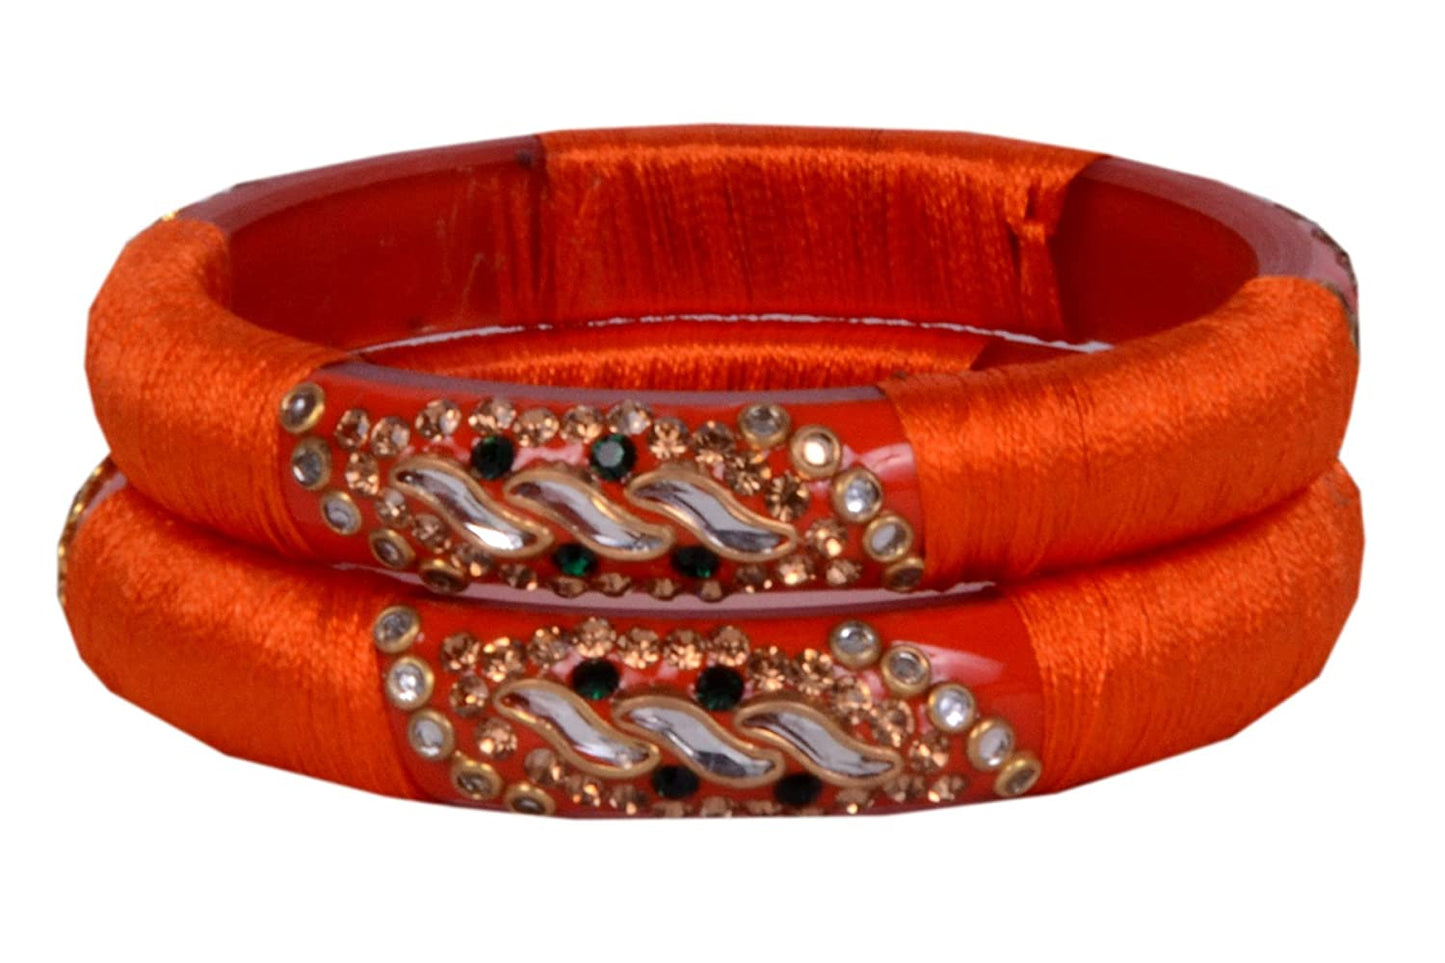 sukriti stylish designer orange silk thread acrylic bangles for girls, women - set of 2